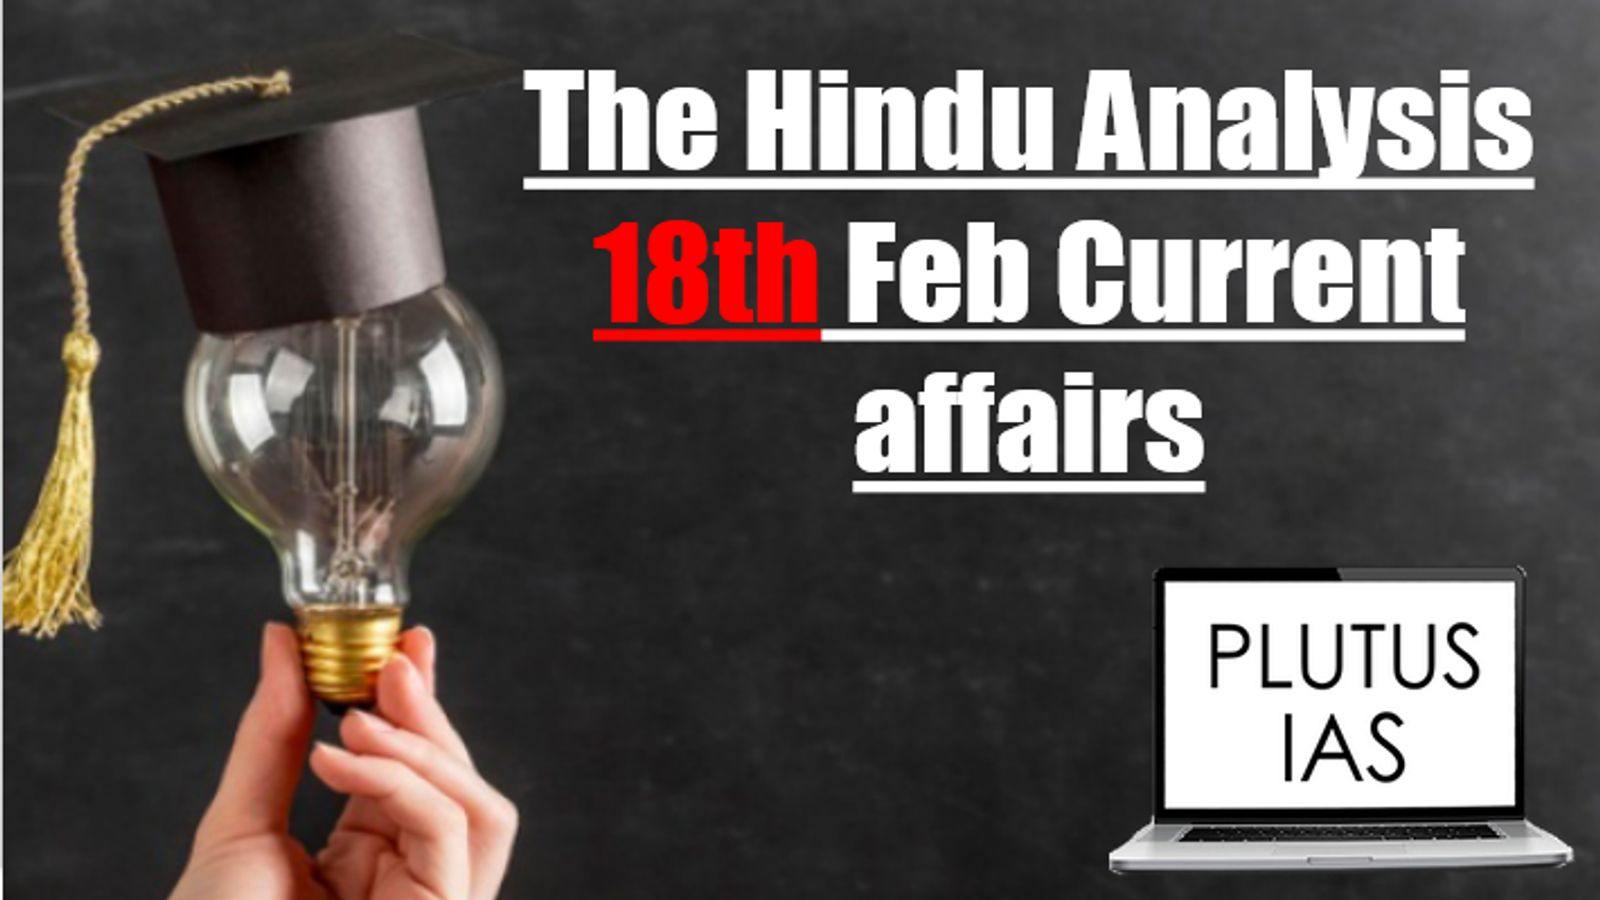 The Hindu Analysis 18th February